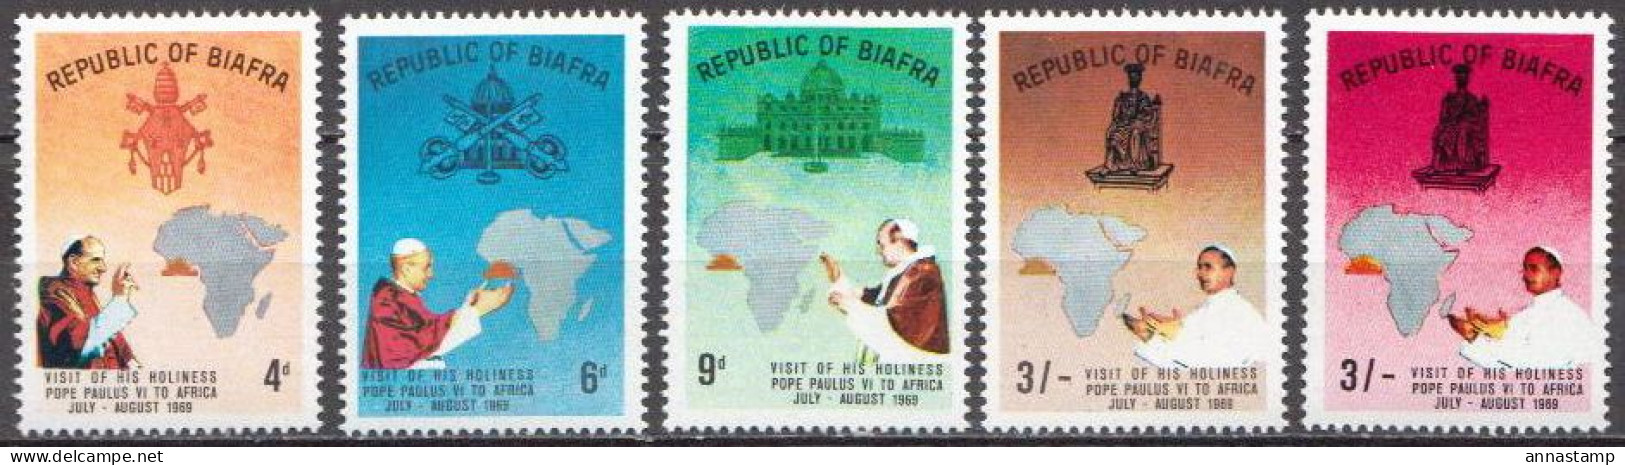 Biafra MNH Set With Error Stamp - Popes